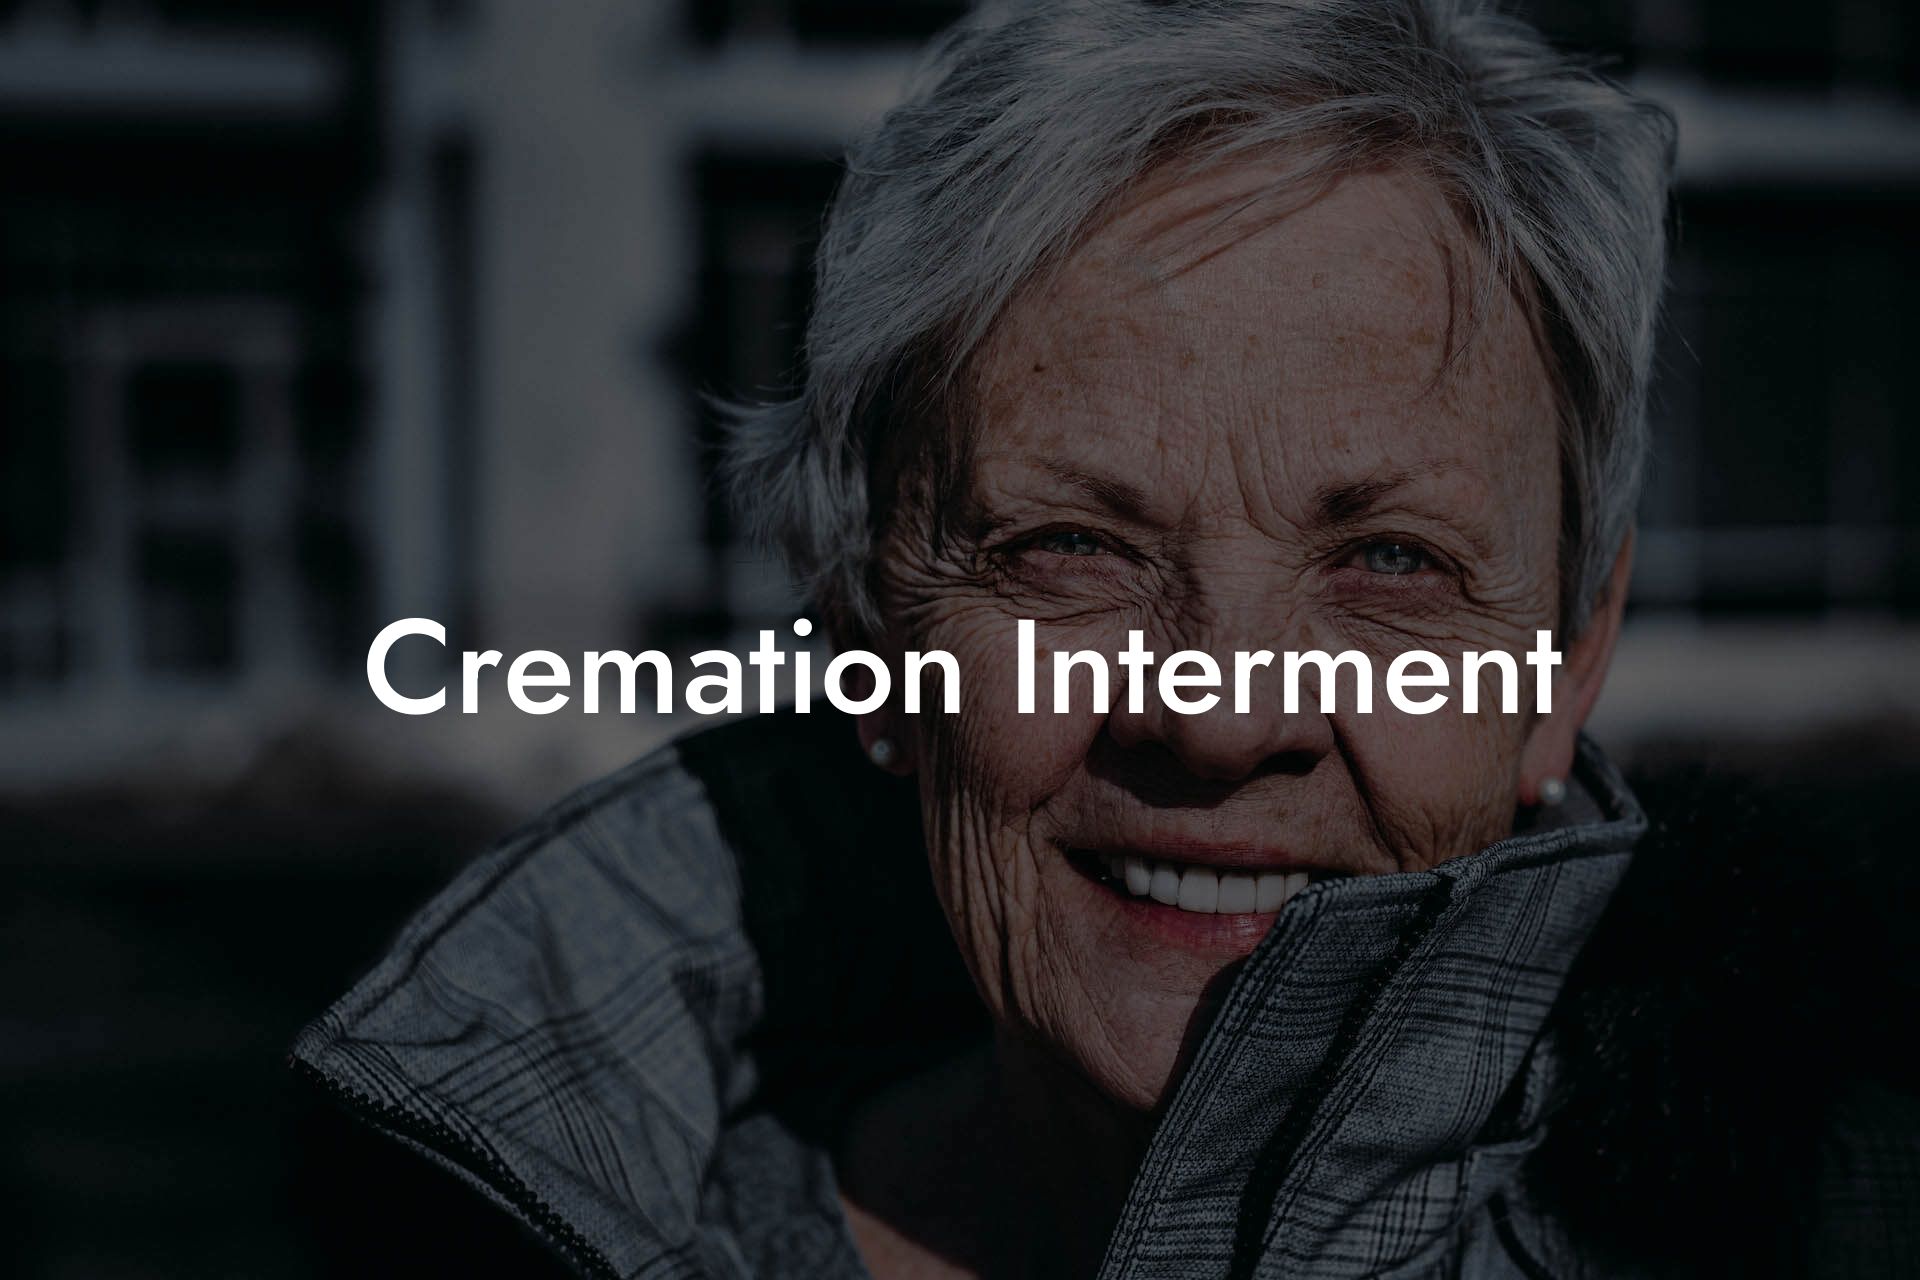 Cremation Interment